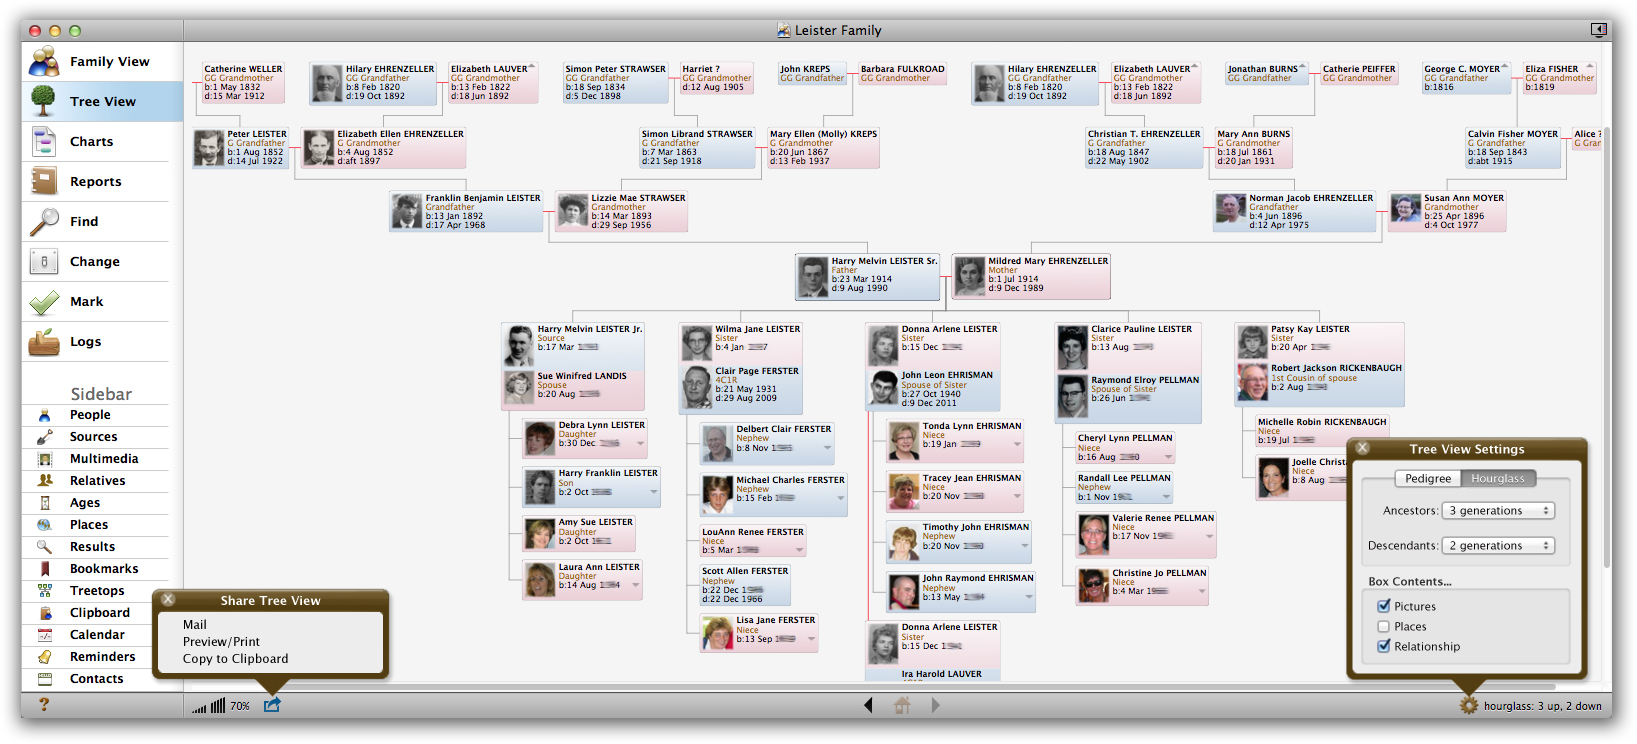 reunion software genealogy